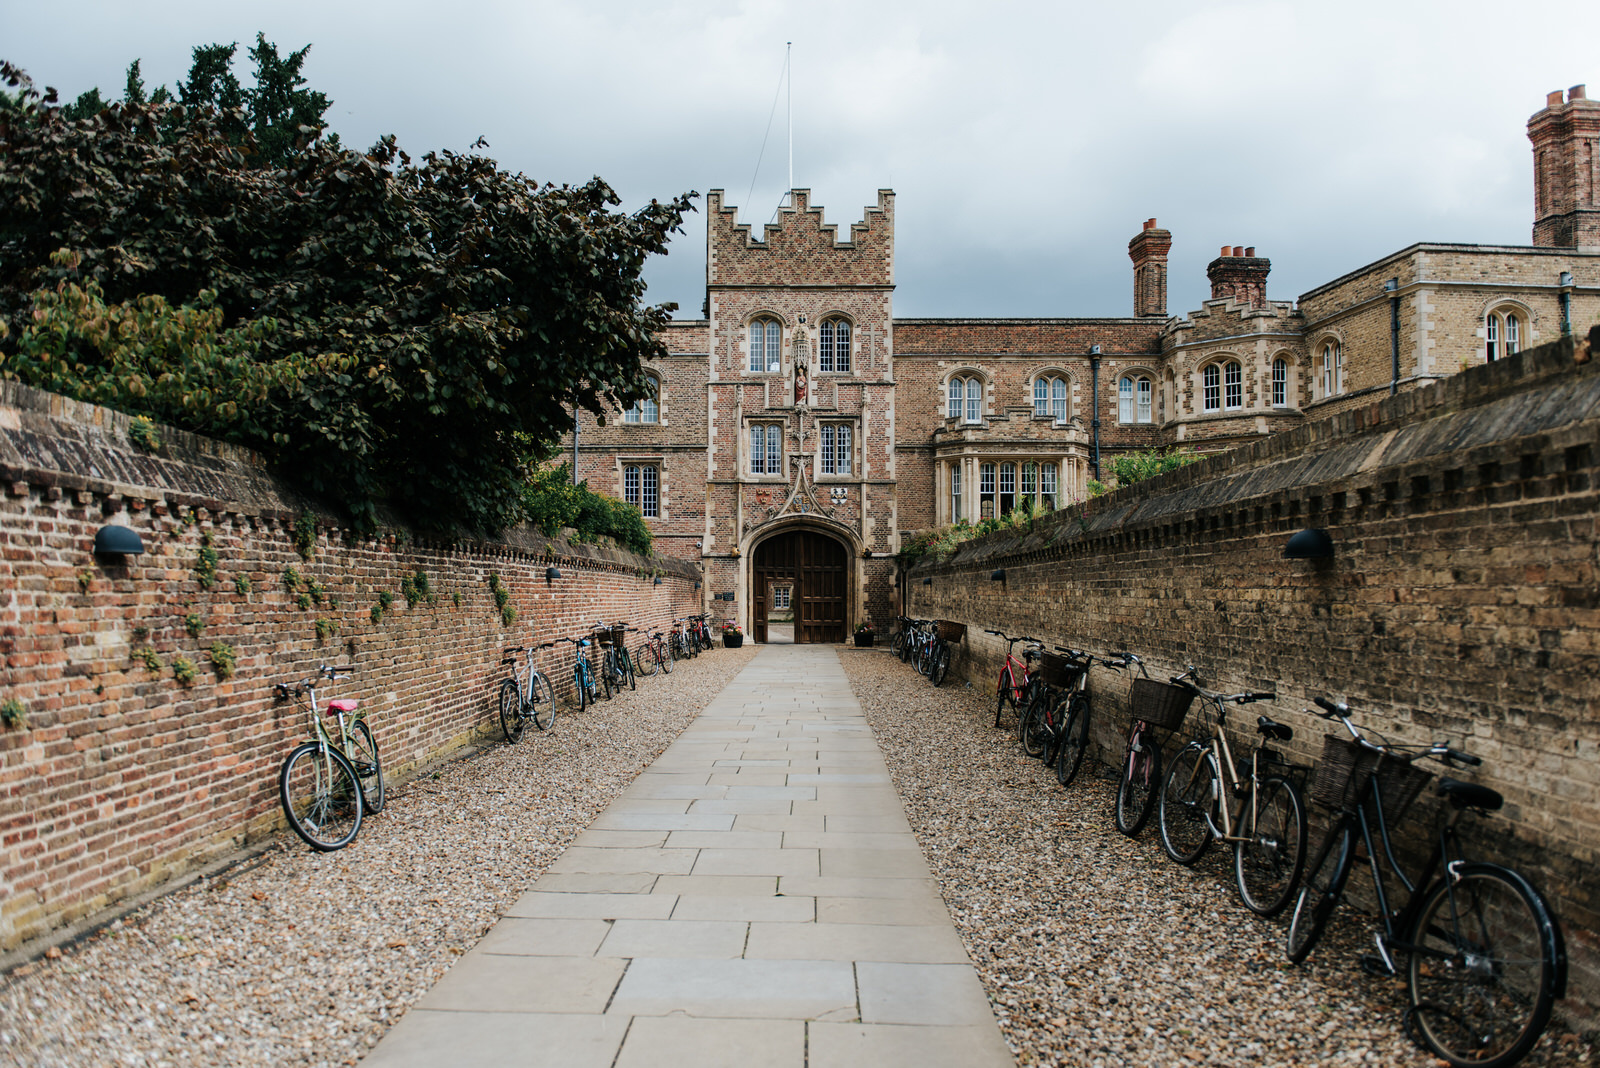 Jesus College Cambridge exterior shot of entrance